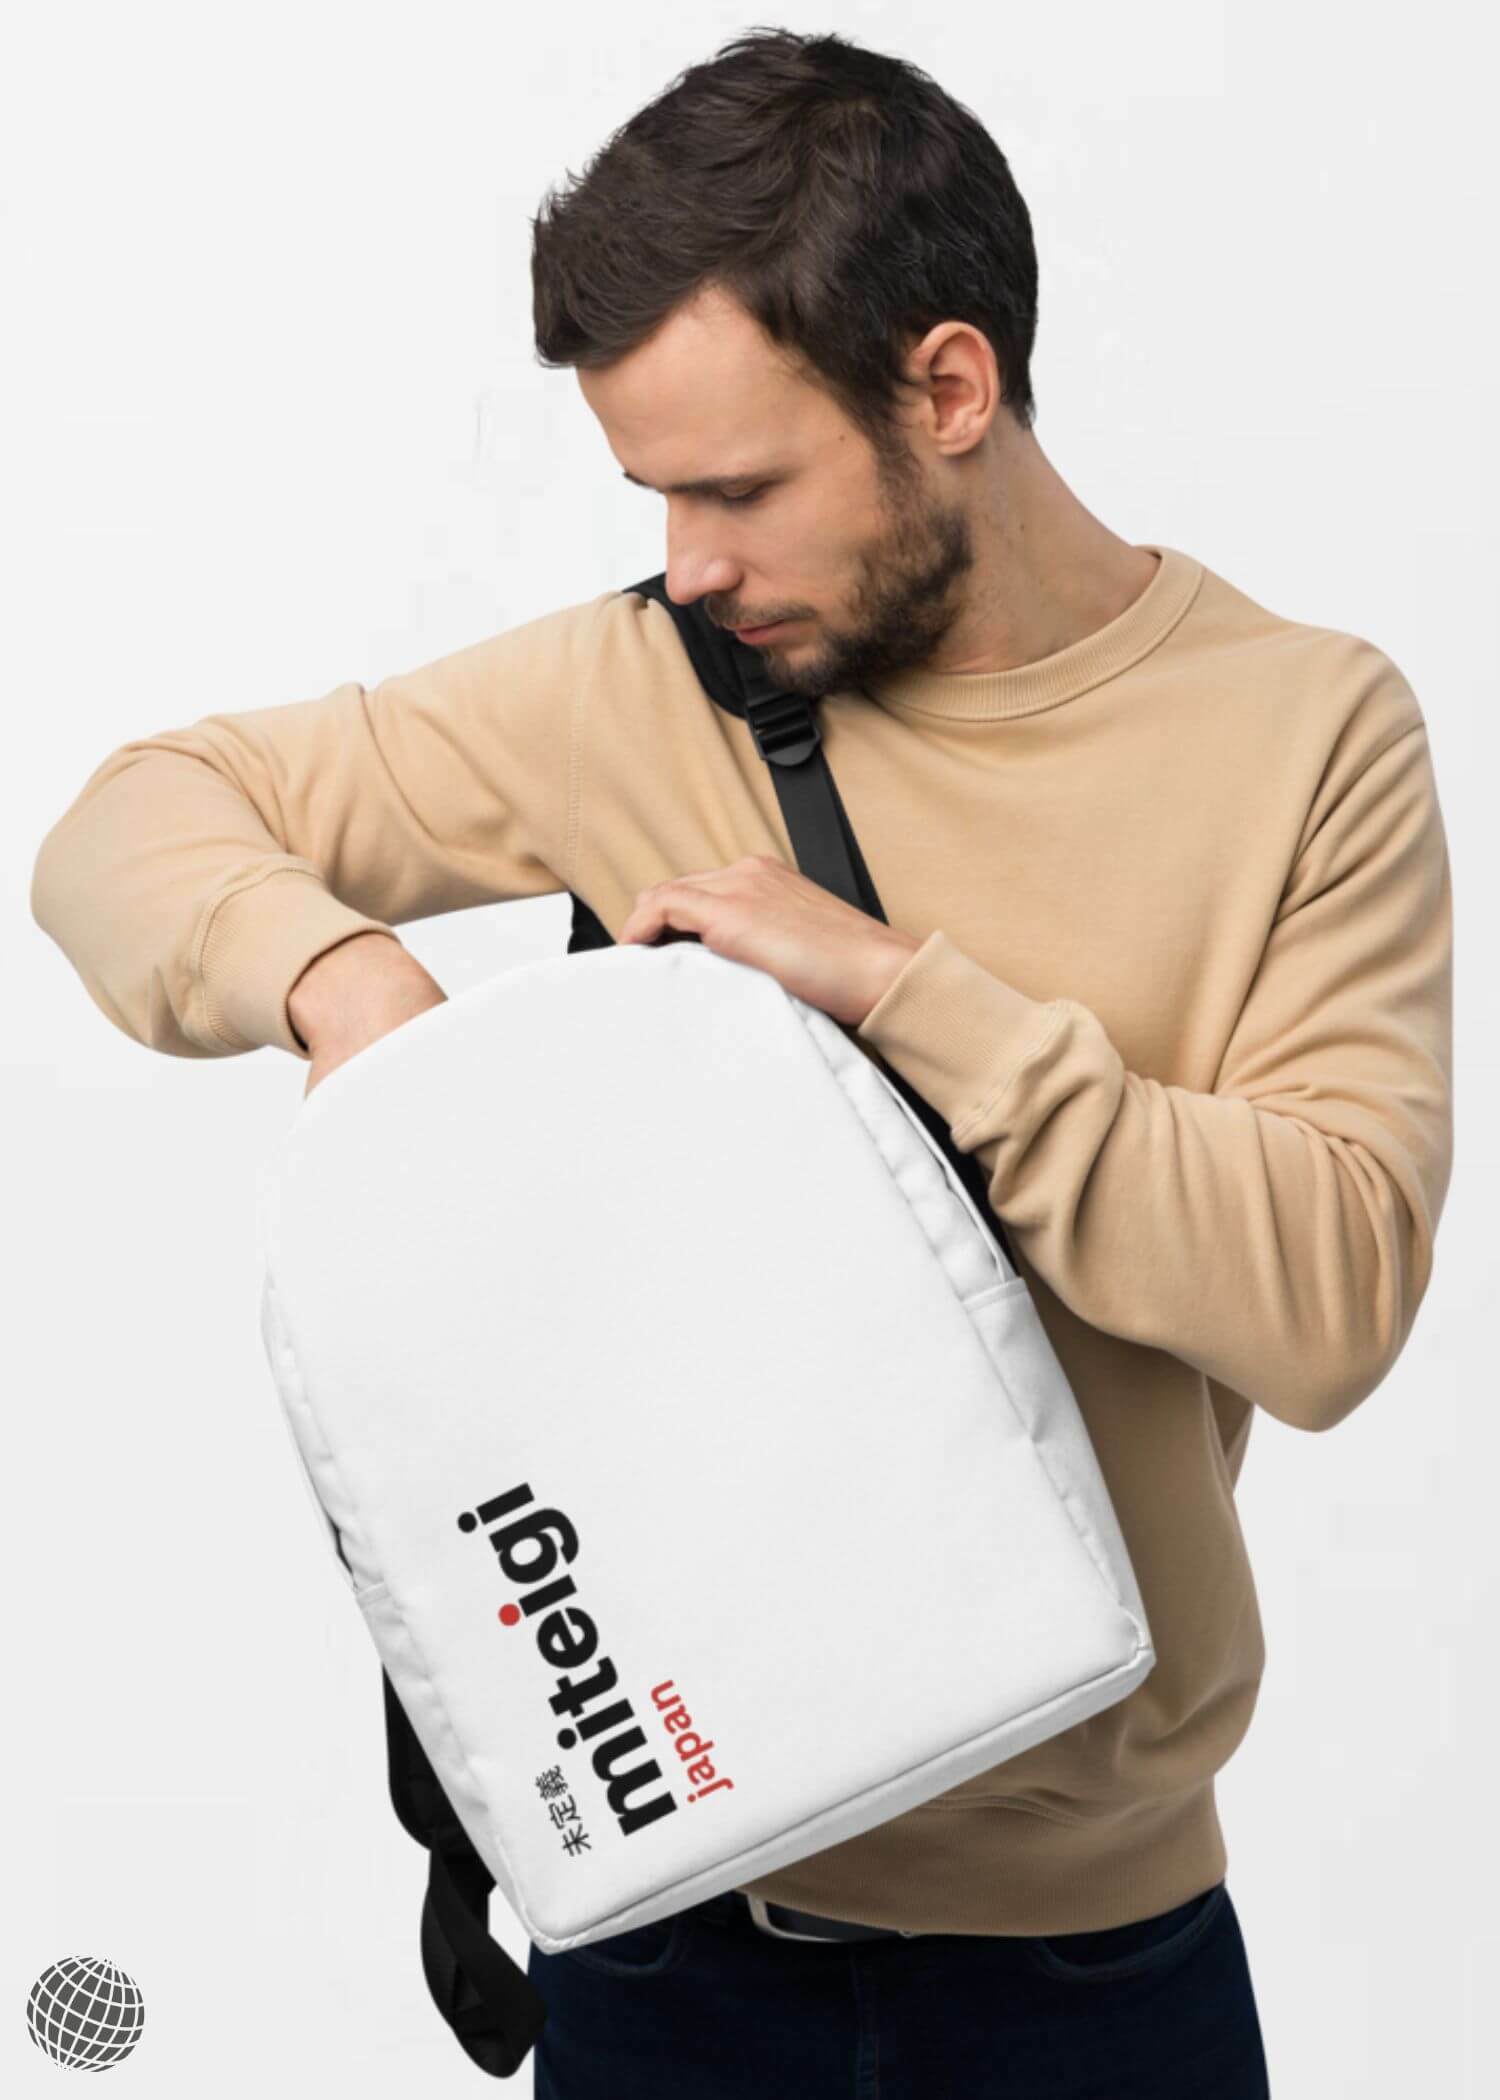 Minimalist Backpack miteigi Logo  miteigi Logo Branded product item travel luggage backpacks bags in white